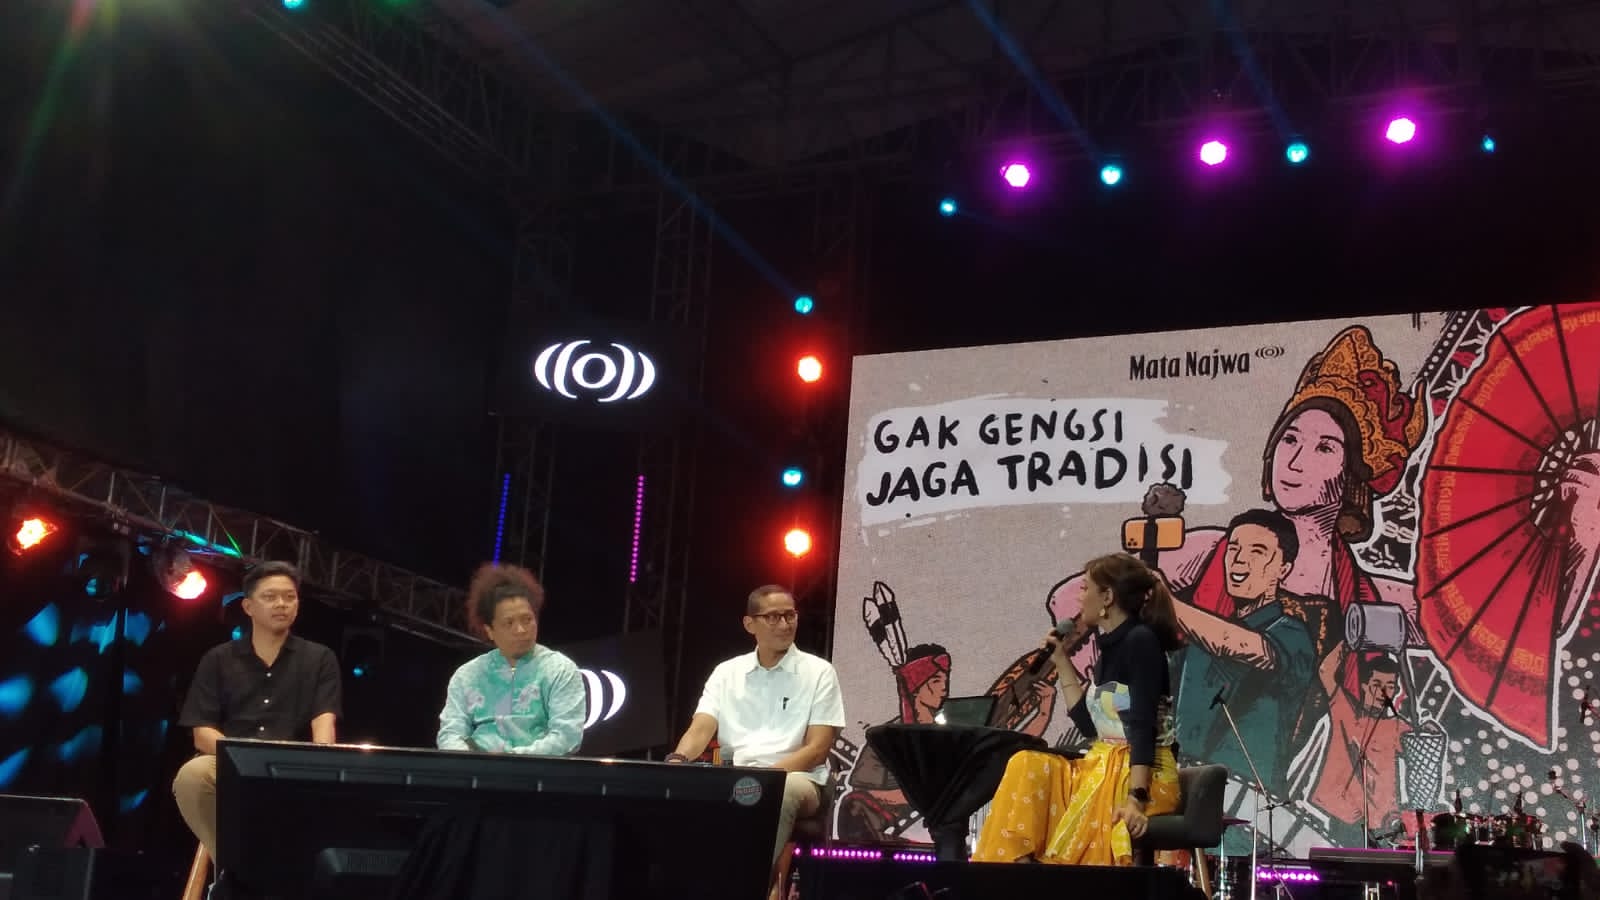 Mata Najwa on Stage Surabaya: Gak Gengsi Jaga Tradisi